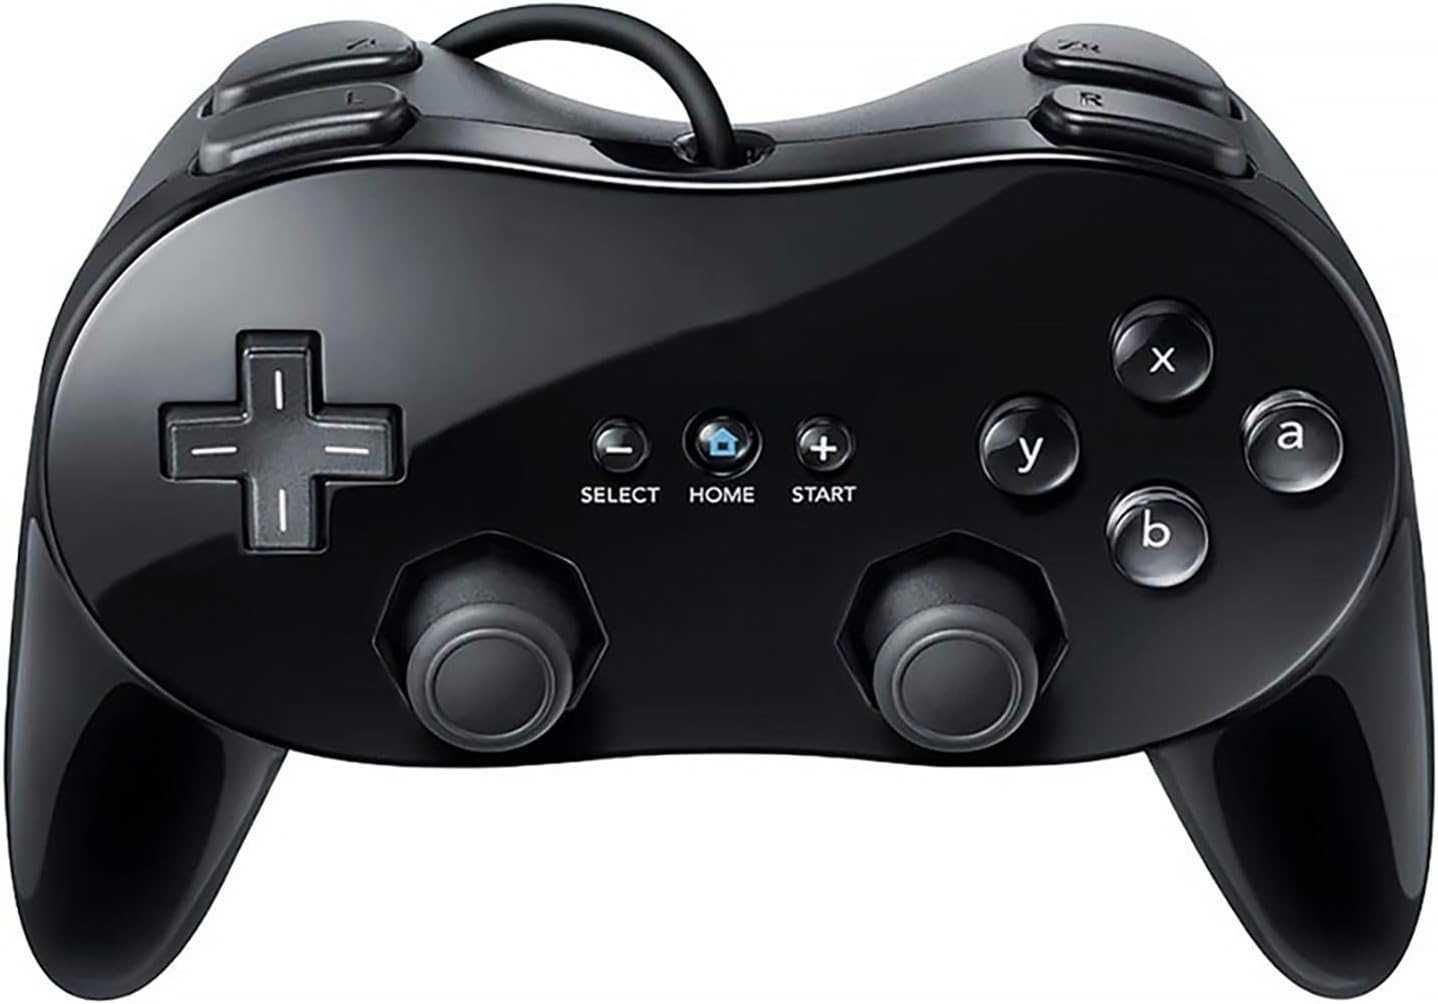 Classic Pro Контролер - за Nintendo Wii - Черен